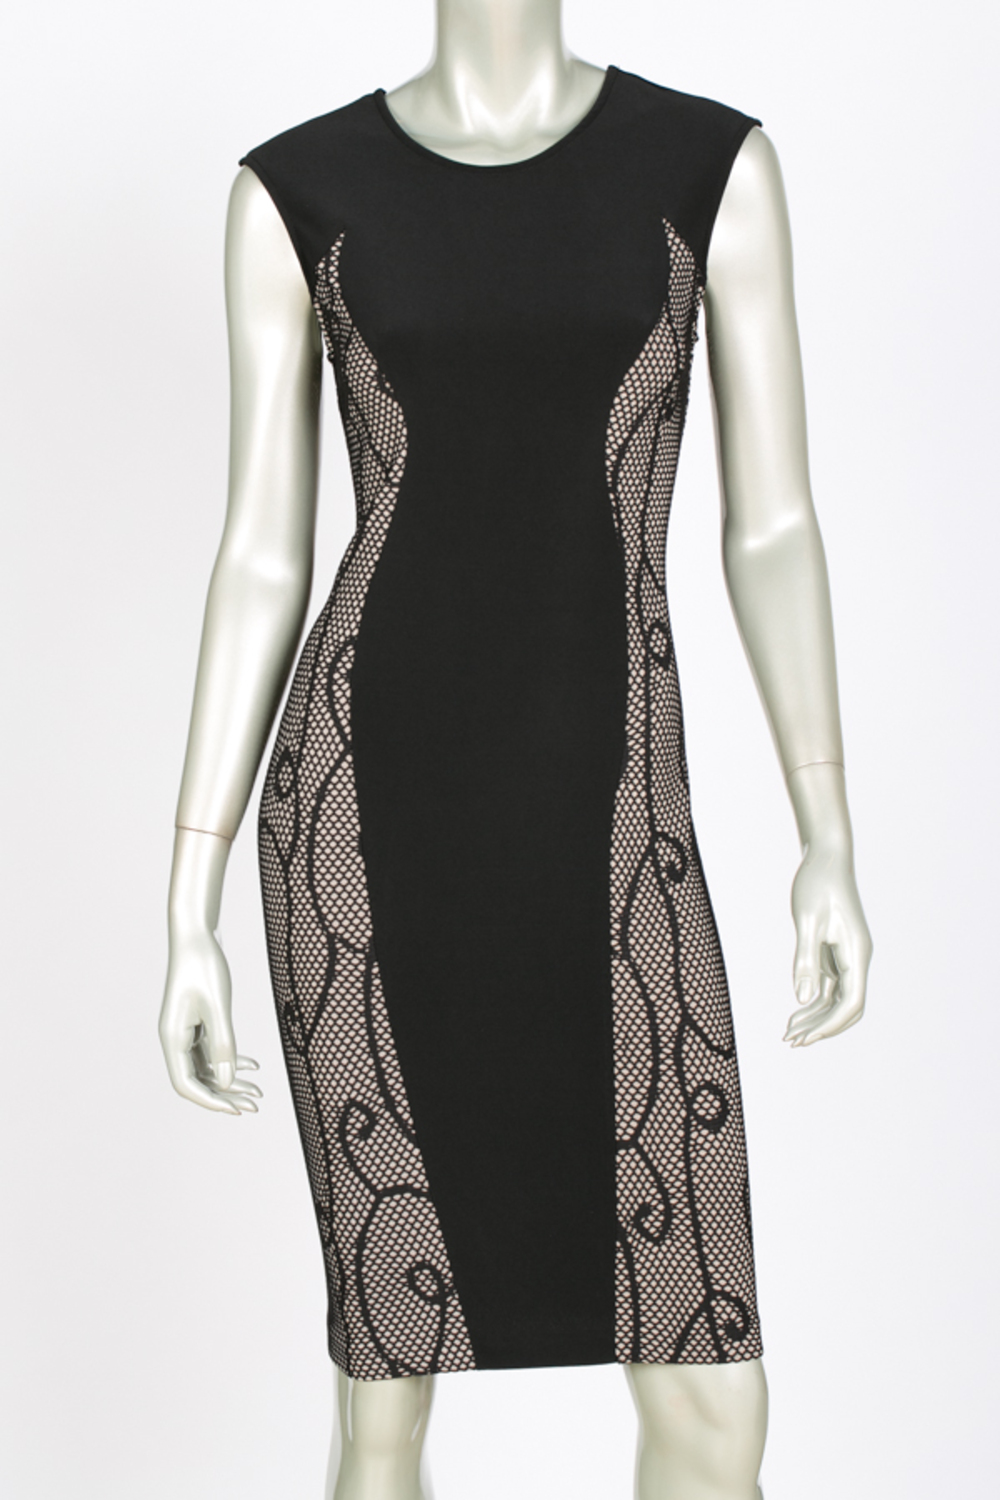 Joseph Ribkoff dress style 144837. Black/taupe